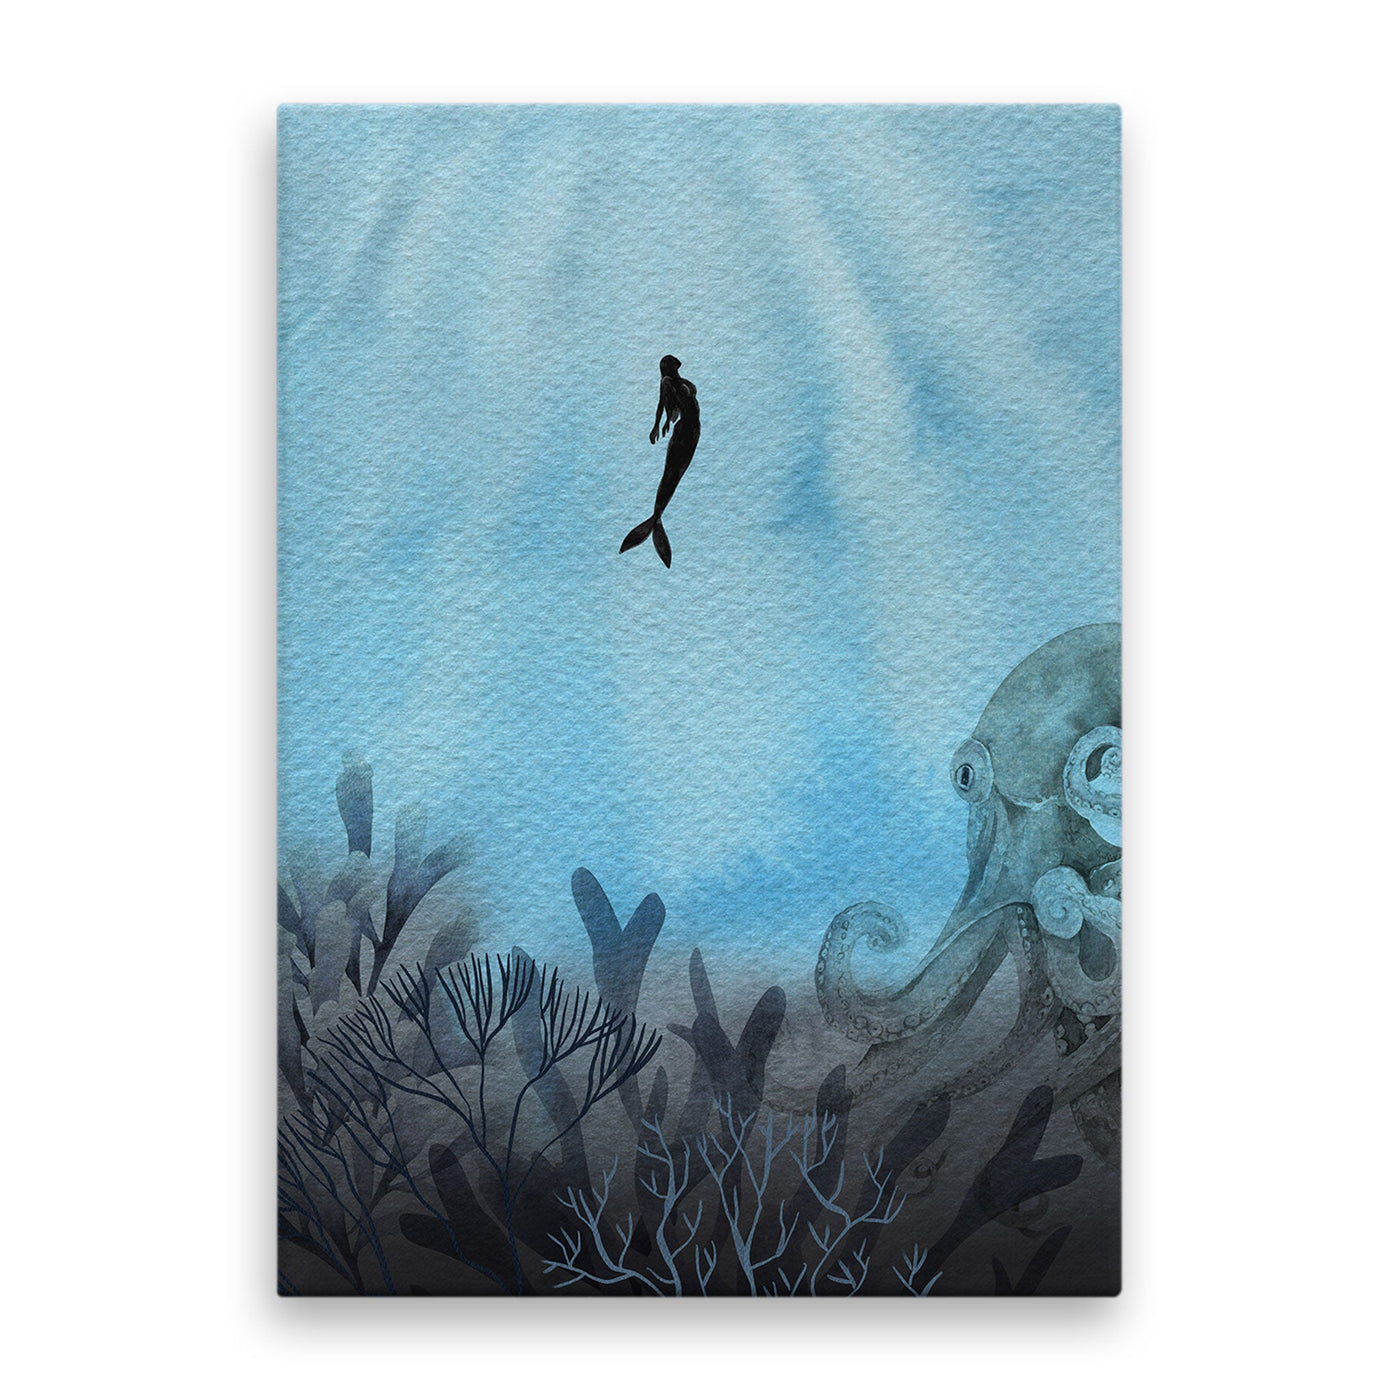 tablou-canvas-pentru-copii-ilustreaza-o-sirena-care-inoata-printre-corali-in-adancul-marii-albastre-creand-o-imagine-plina-de-culoare-si-magie-underwater-magic